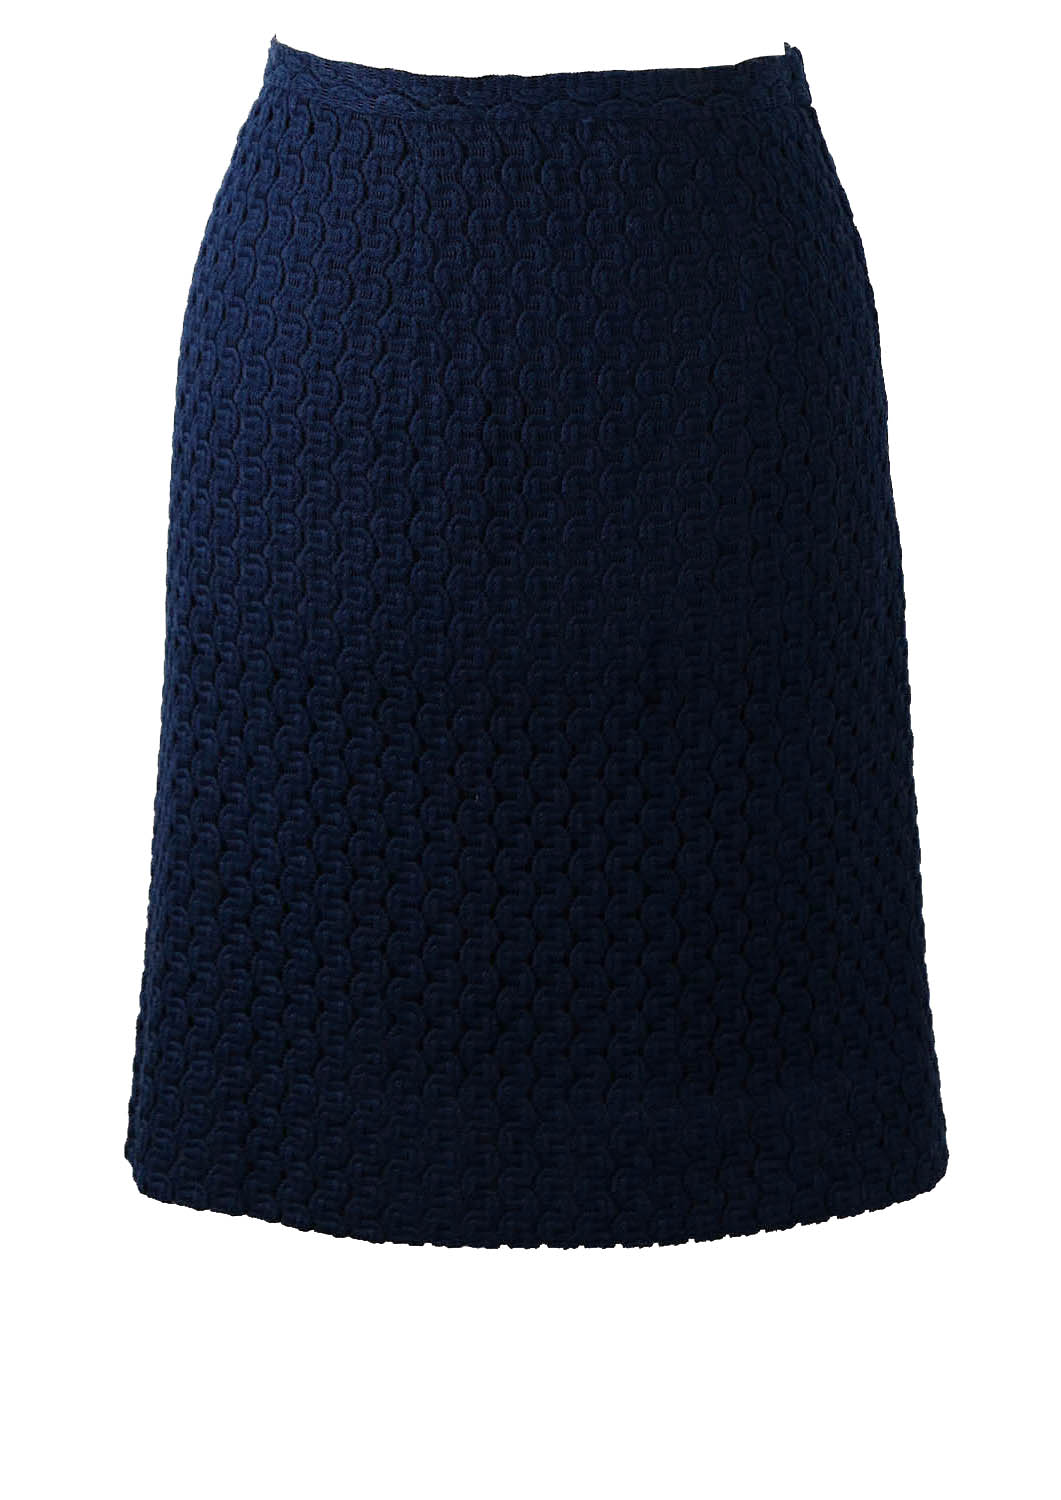 Vintage 1960's Blue Crochet Knee Length Pencil Skirt - M | Reign Vintage